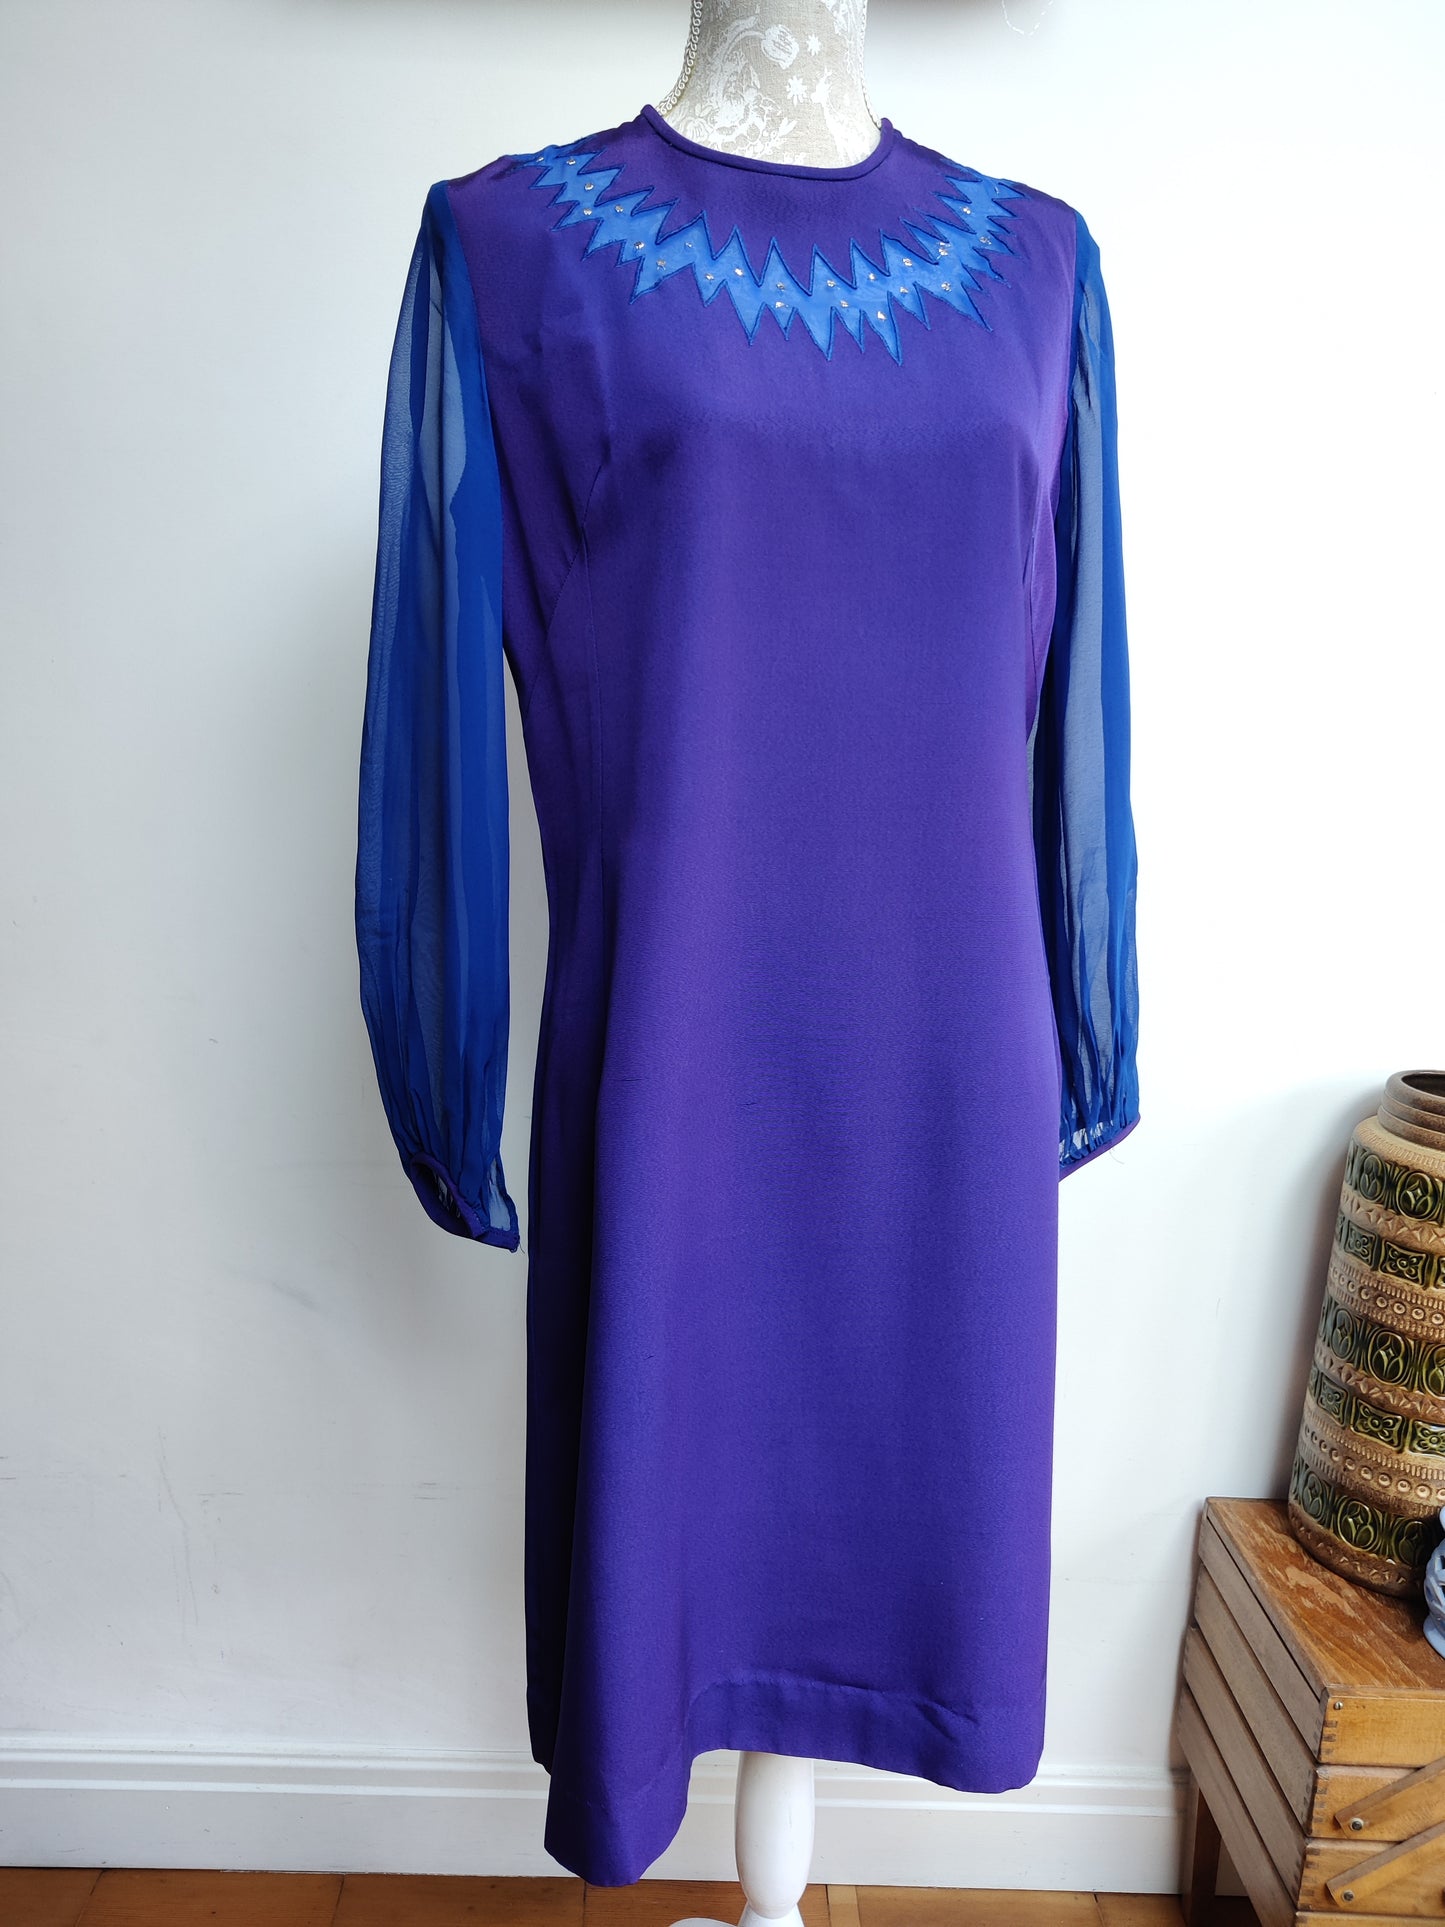 Blue and purple 1960s dress size 12-14